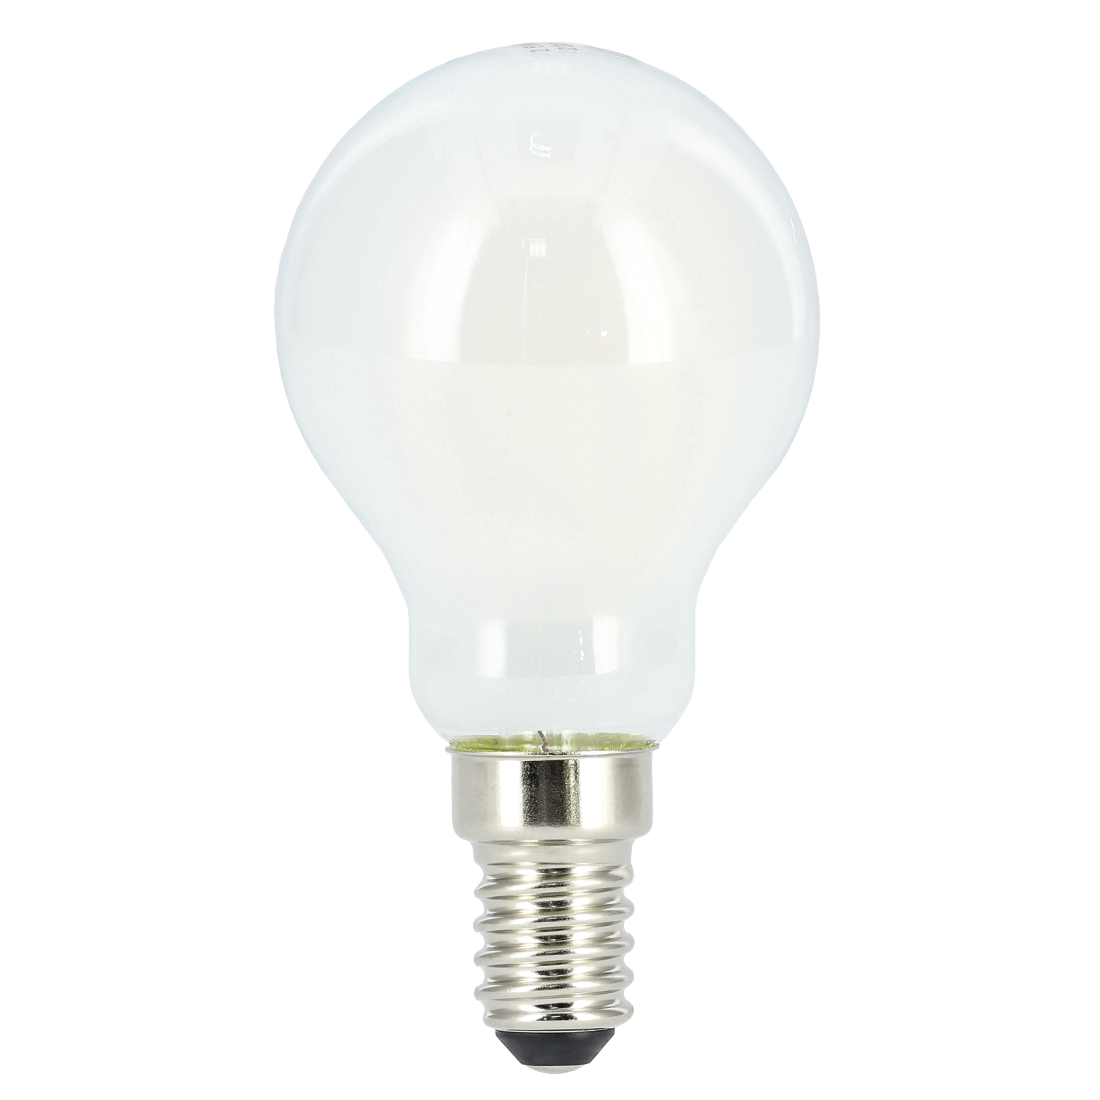 abx High-Res Image - Xavax, Ampoule filament LED, E14, 250lm rempl. 25W, amp. sphr., mate, blc chd